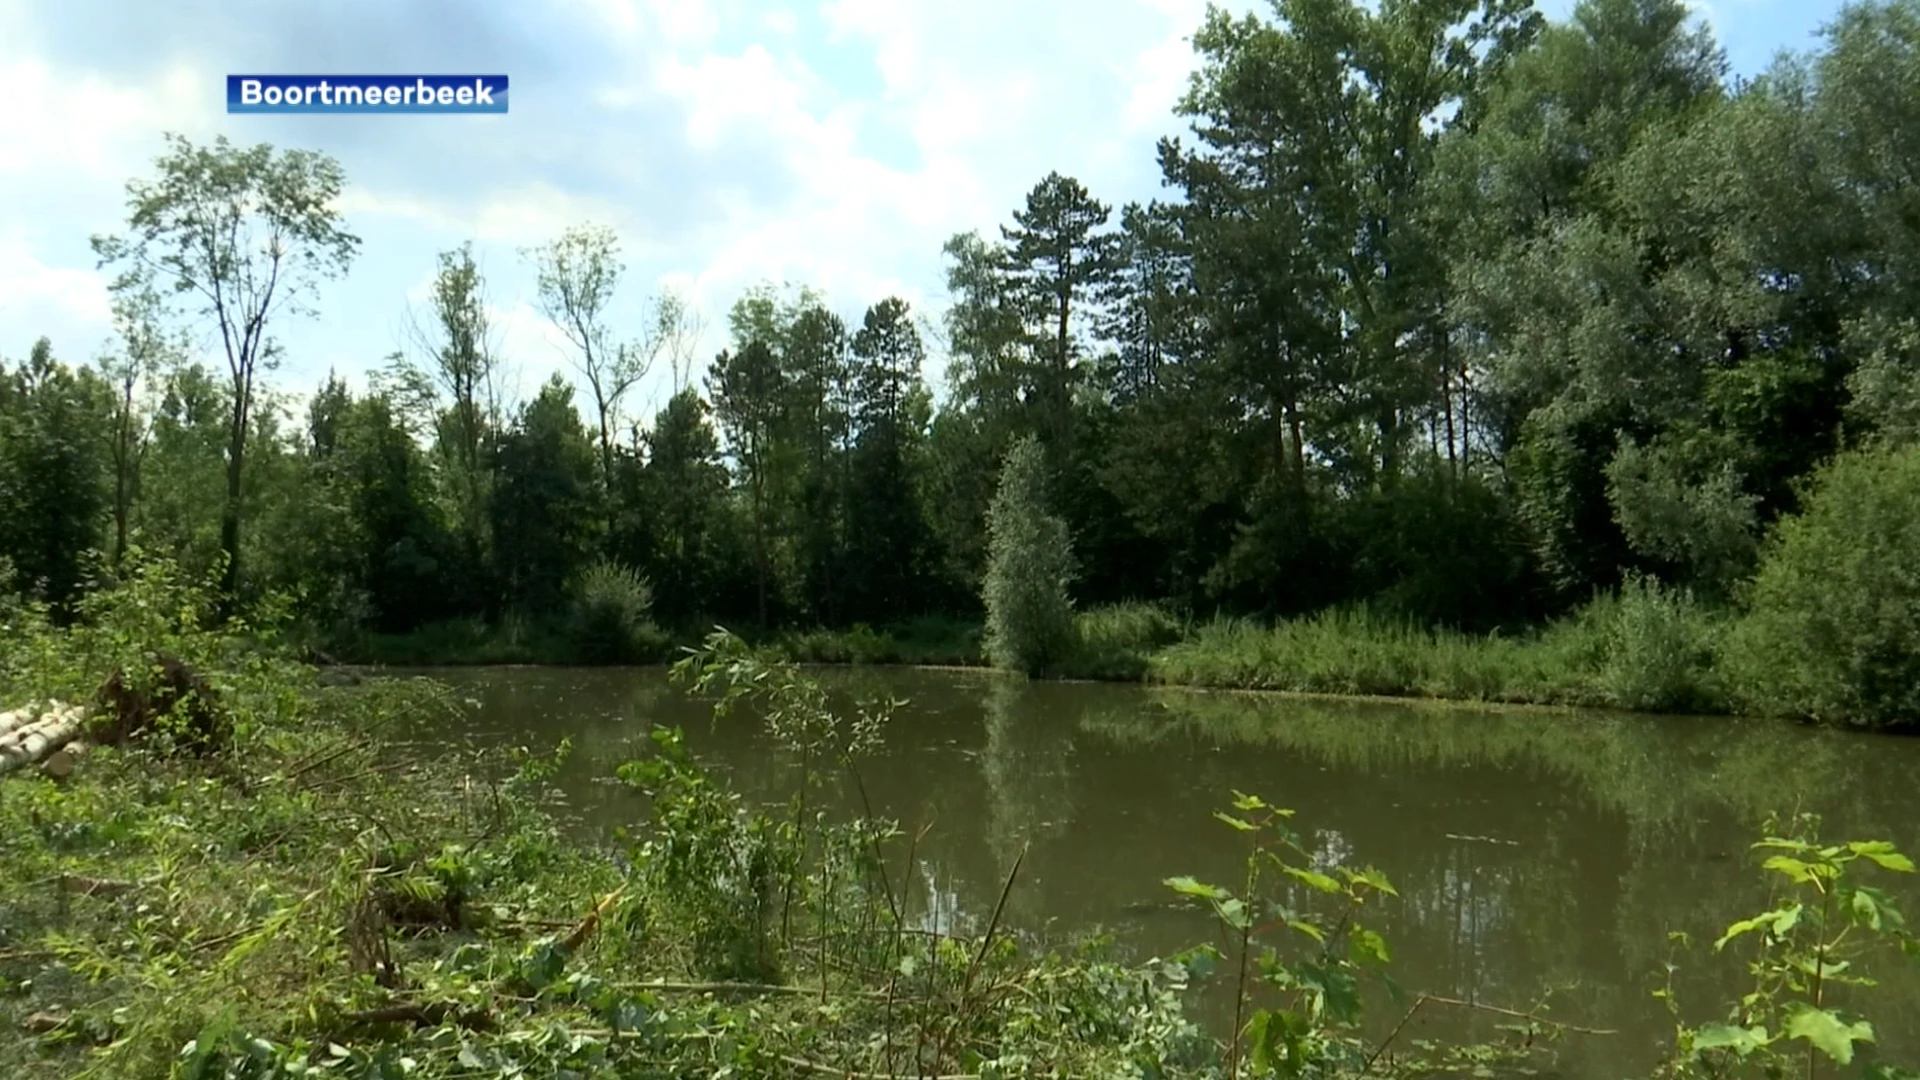 Oude visvijver in Pikhakendonk in Boortmeerbeek wordt nieuwe verblijf voor kamsalamanders